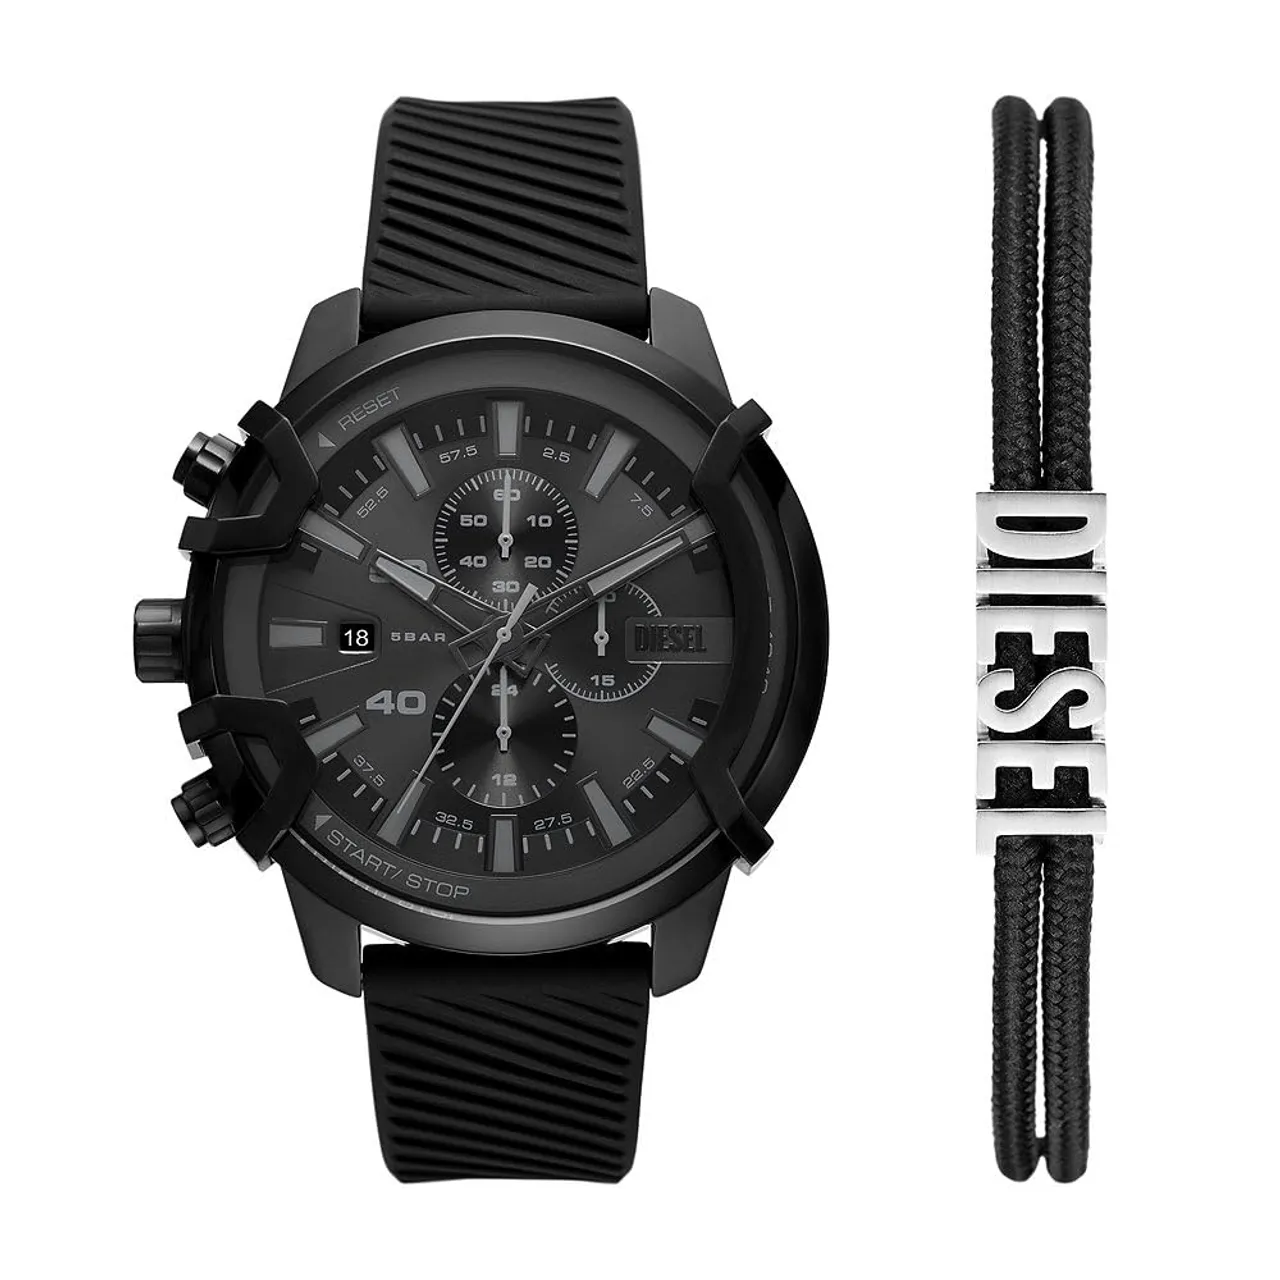 Diesel Men's Chronograph Quartz Watch with Silicone Strap